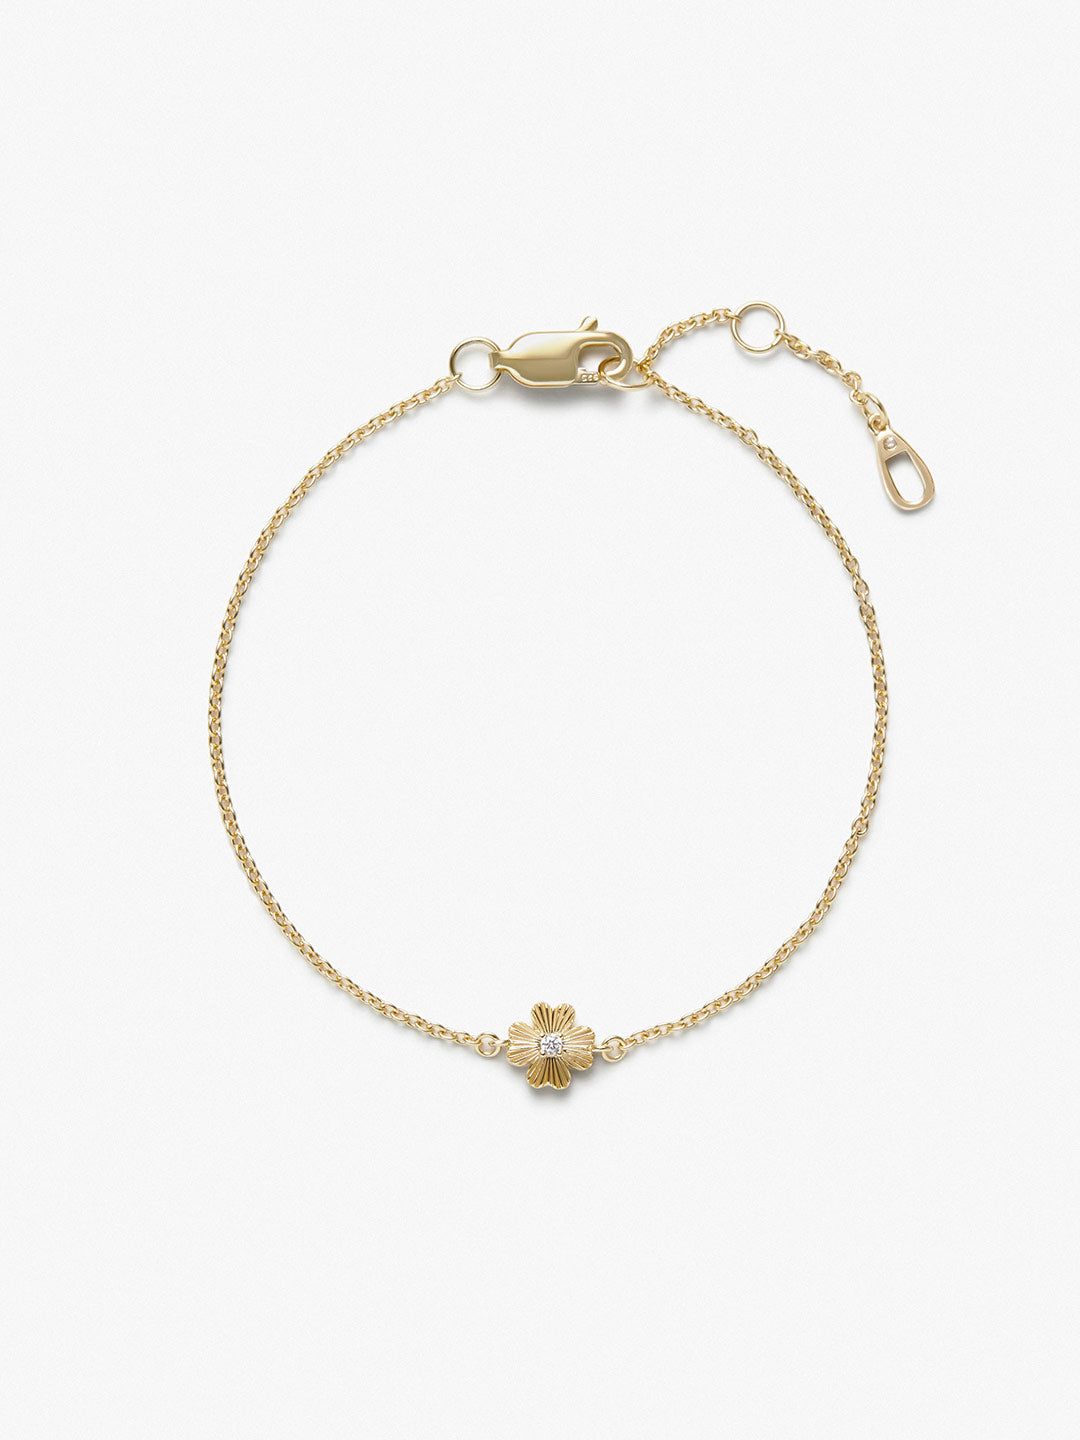 Stacking Bracelets | Ana Luisa Jewelry